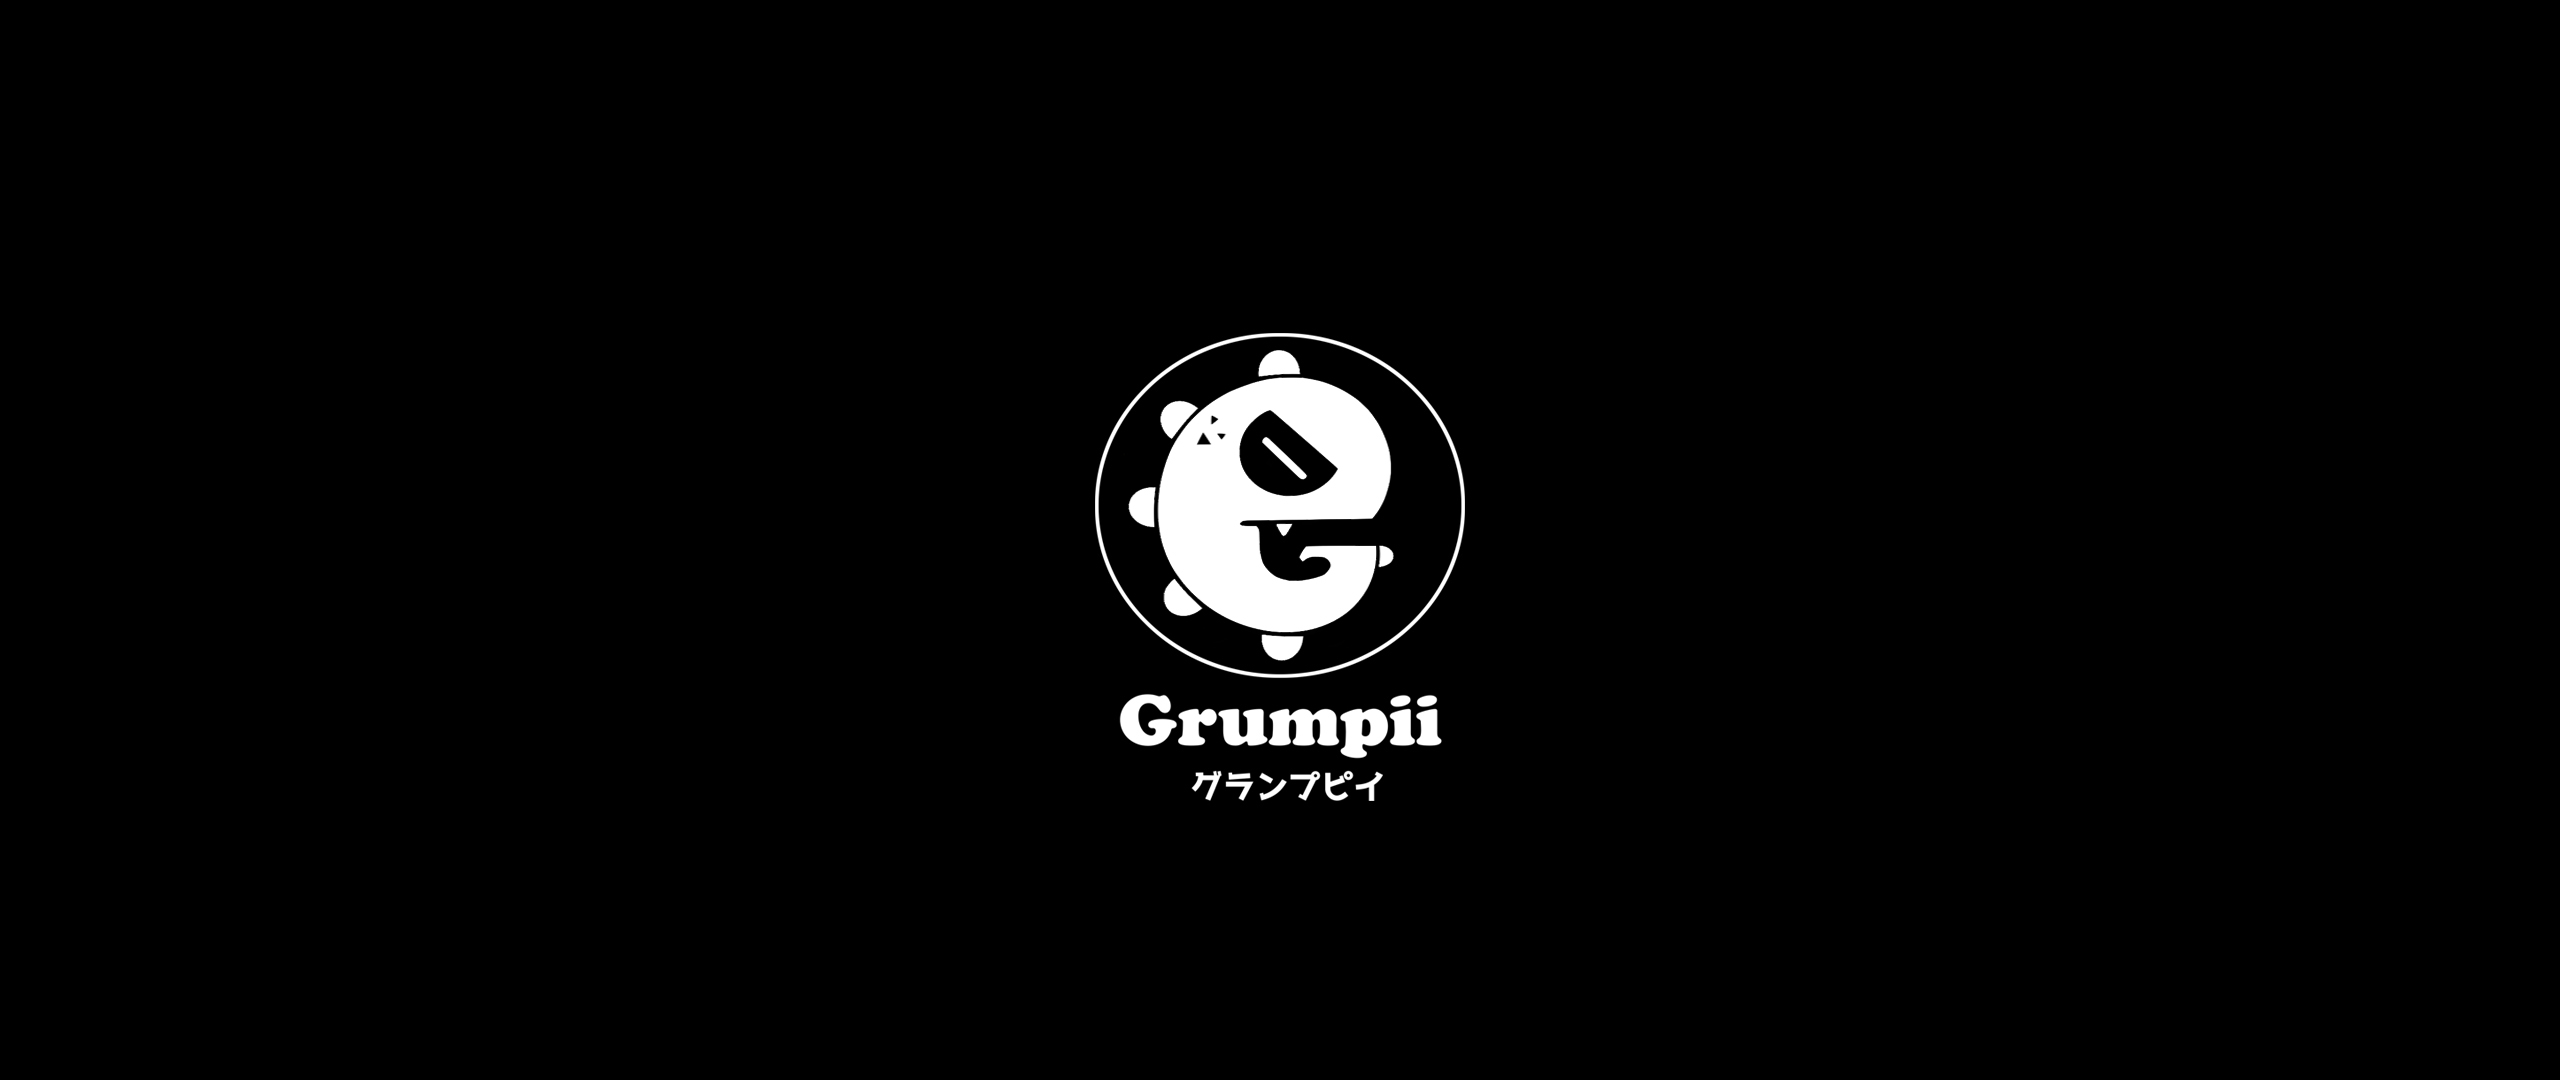 Grumpii